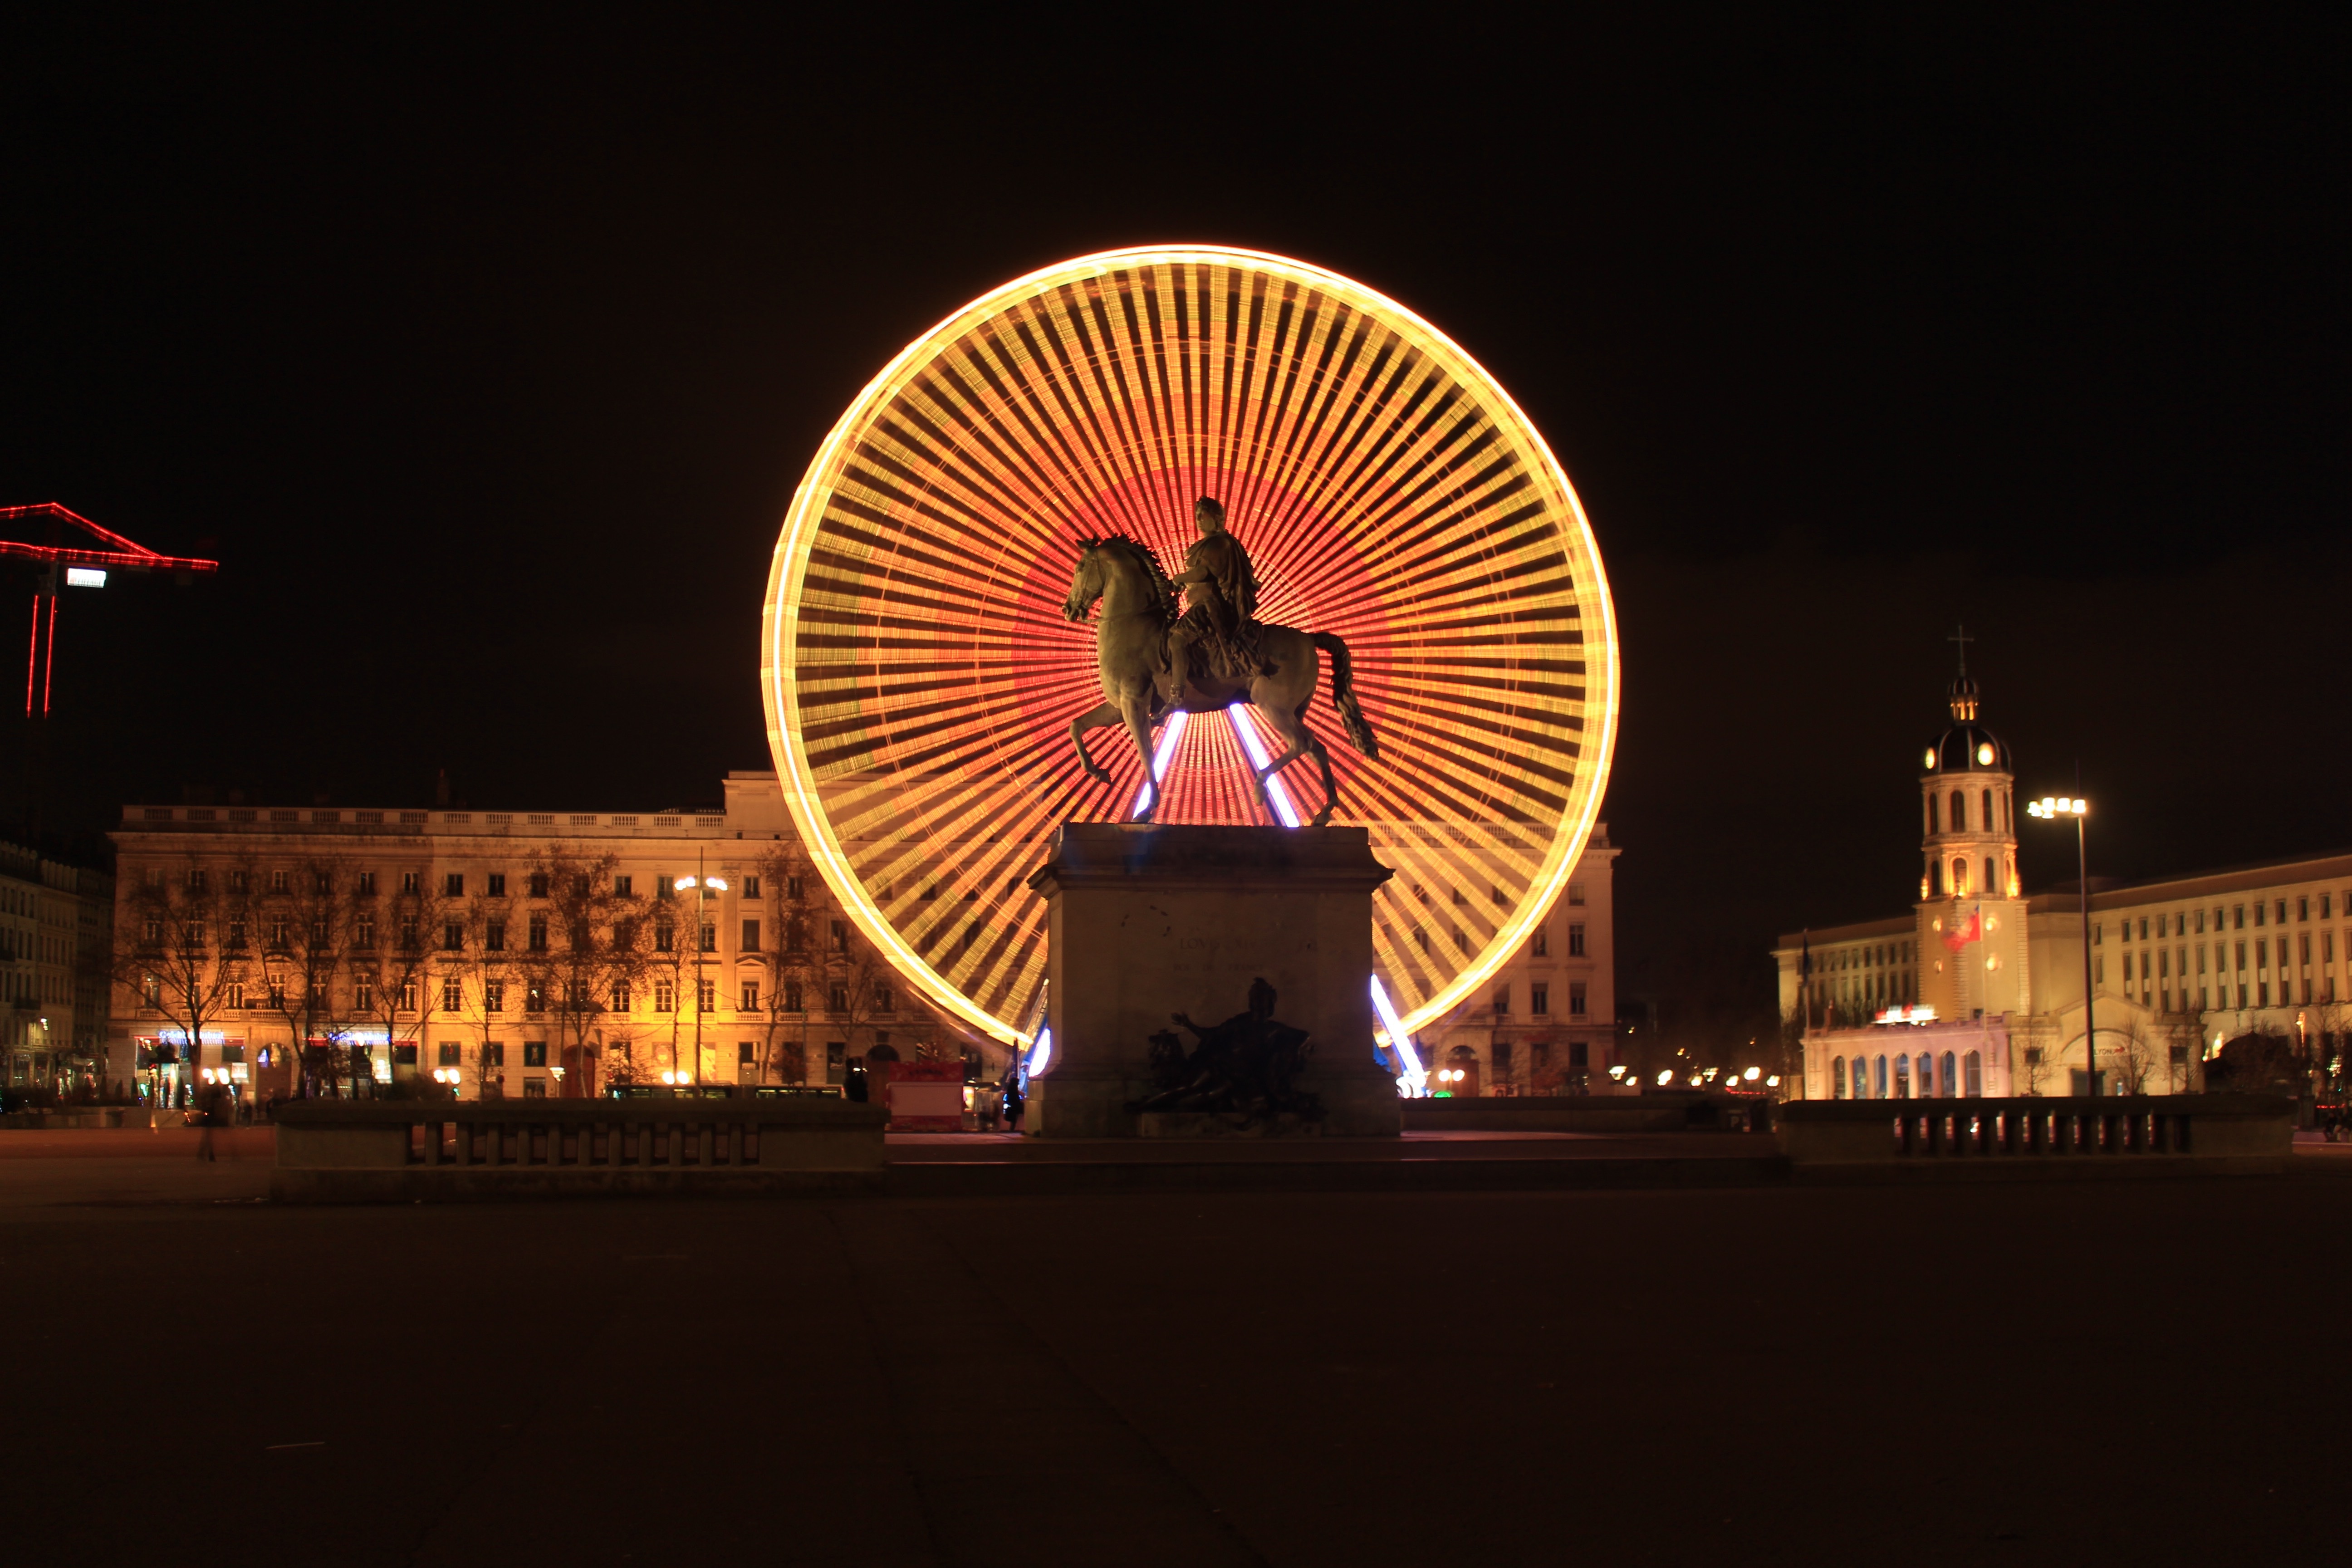 Ferris Wheel and Statue of King Louis XIV in La Place Bellecour Lyon, France by Thomas43